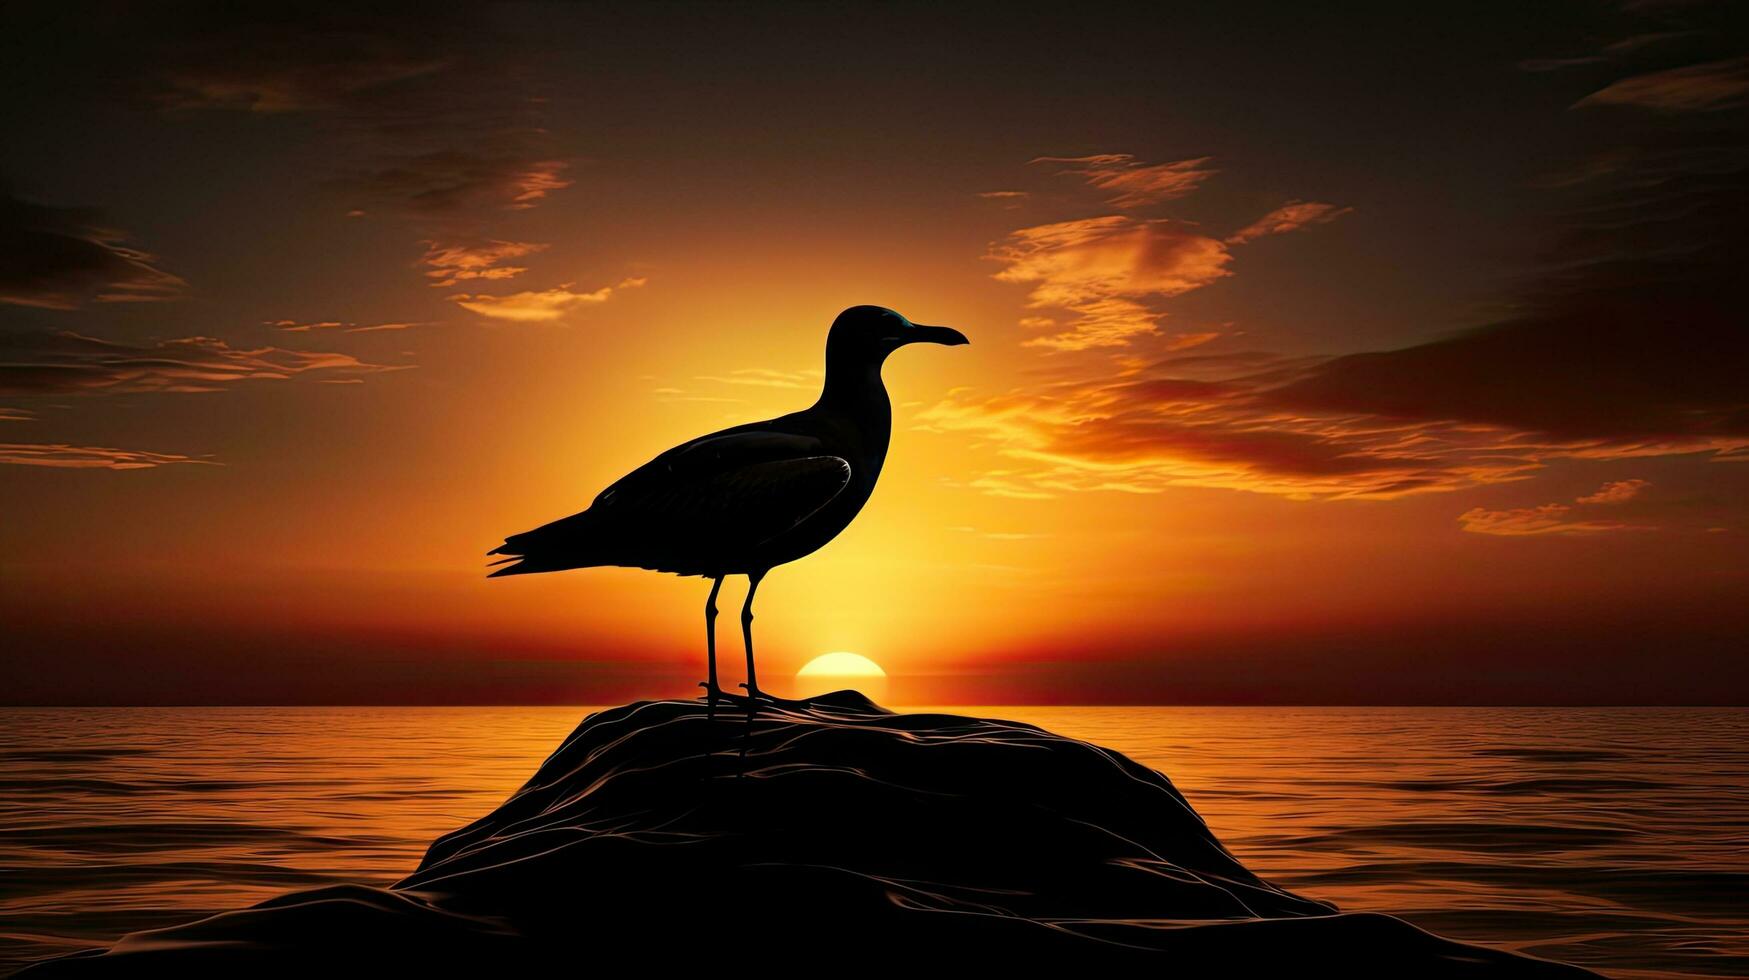 Seagull shadow silhouette photo